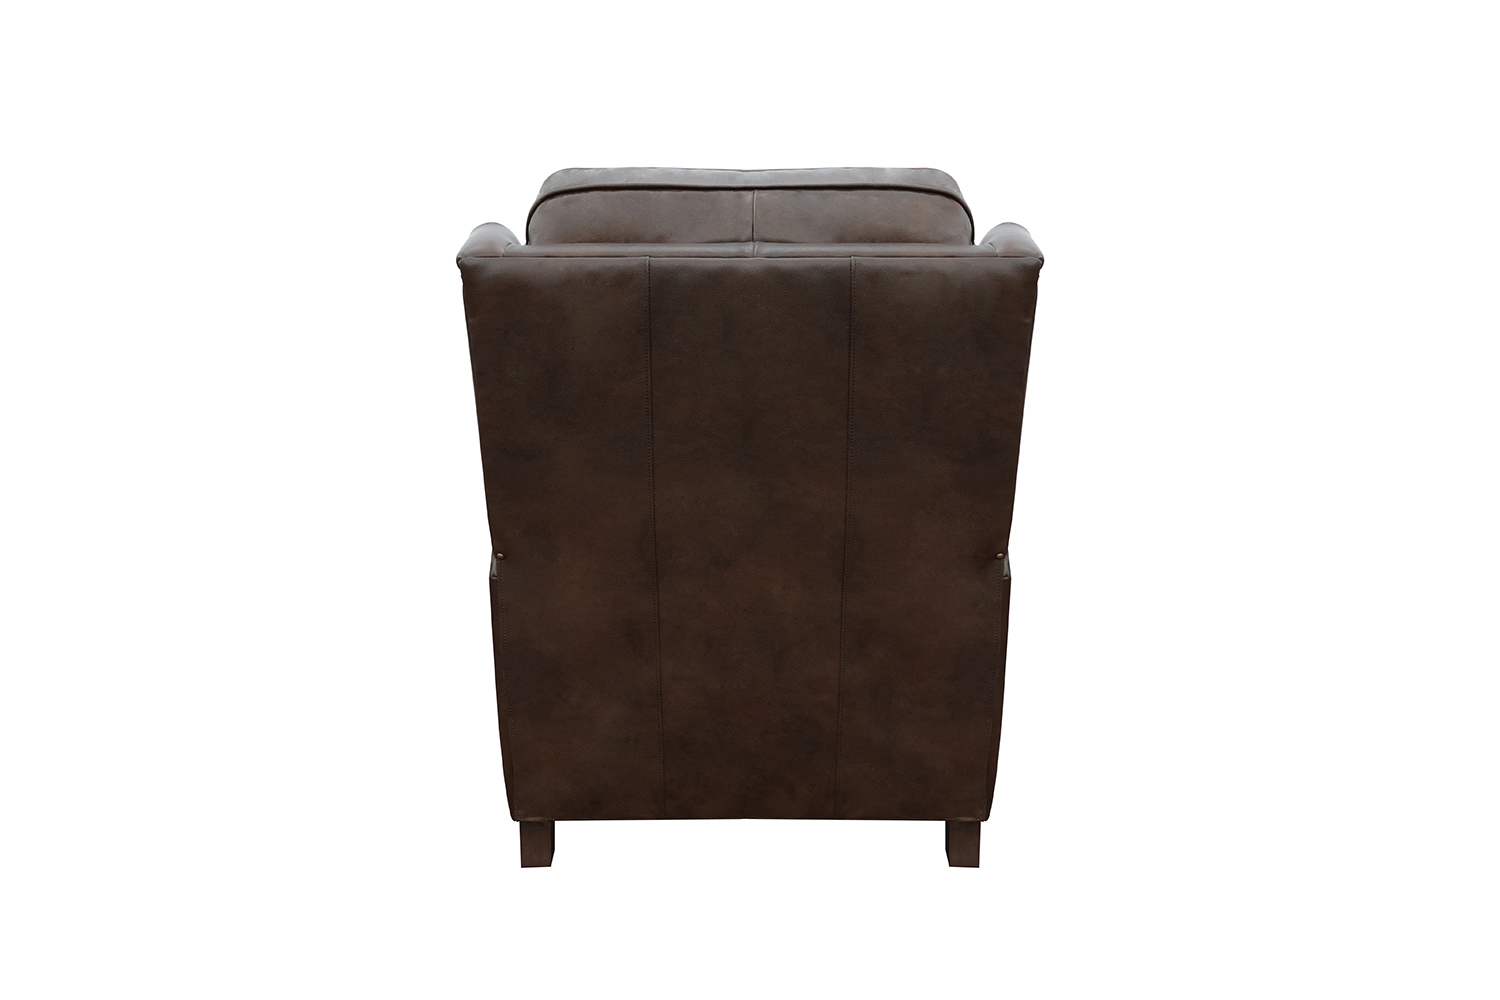 Barcalounger Riley Recliner Chair - Ashford Walnut/All Leather